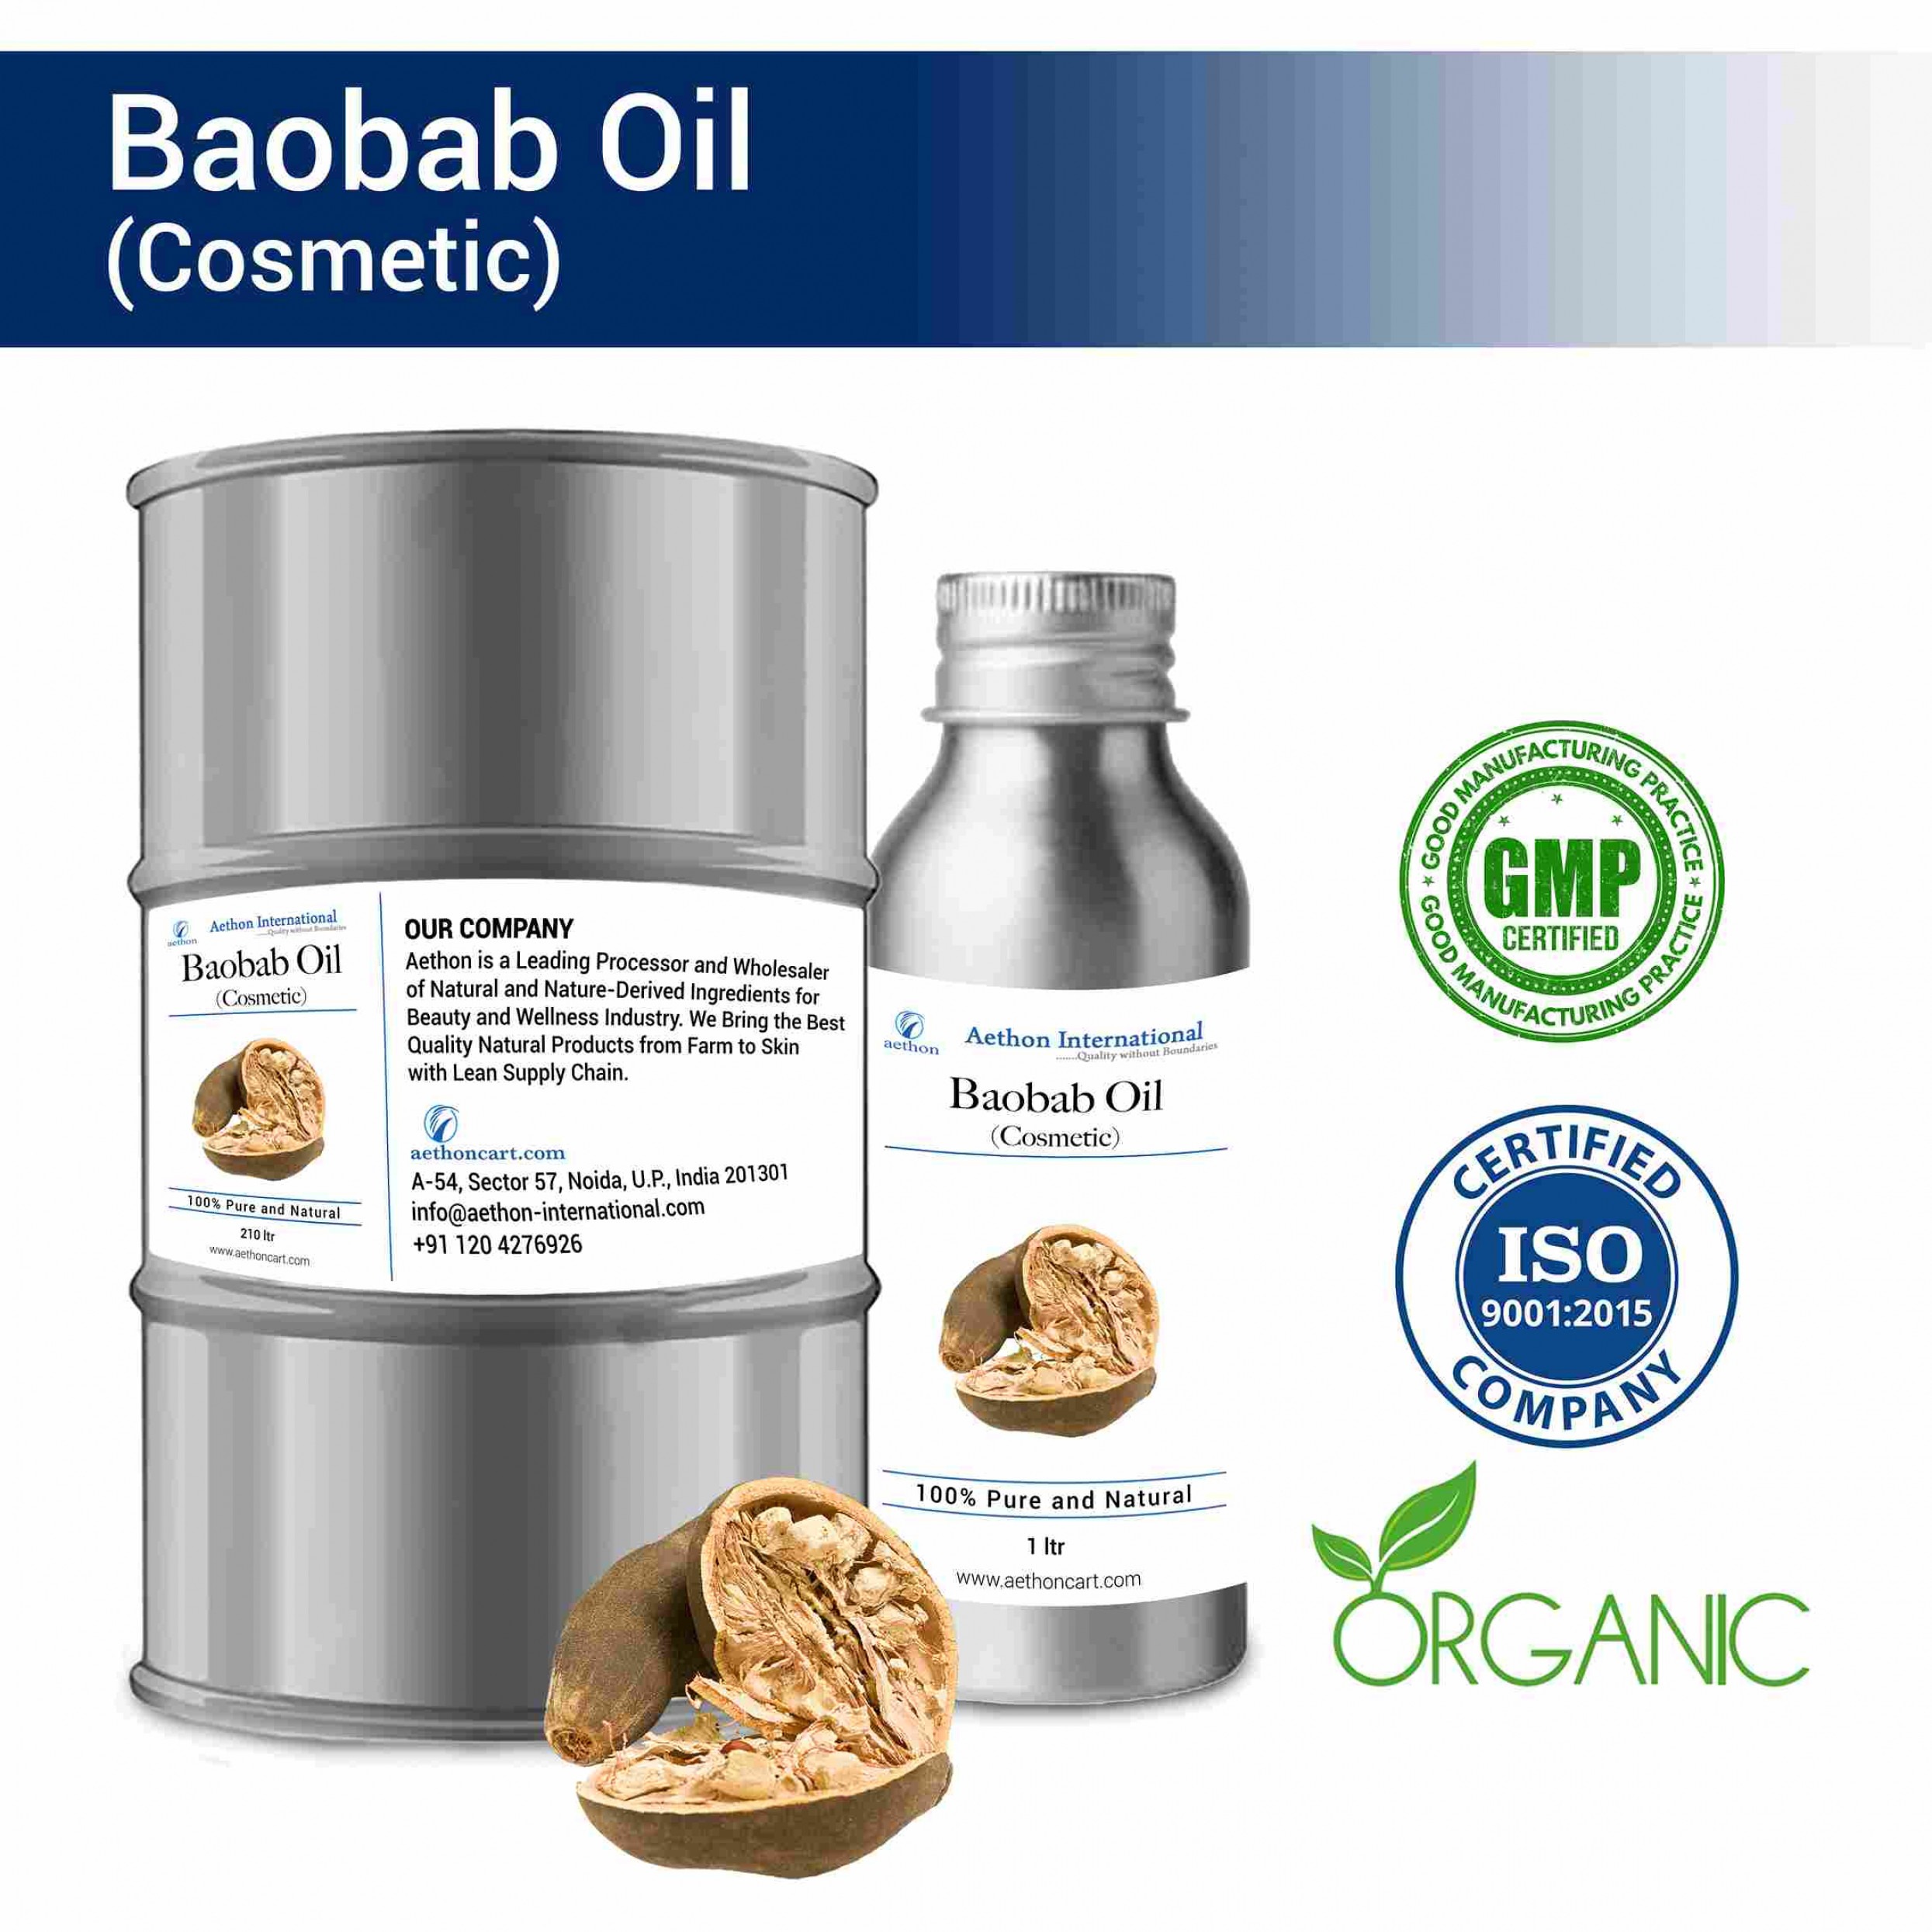 Baobab Oil (Cosmetic)